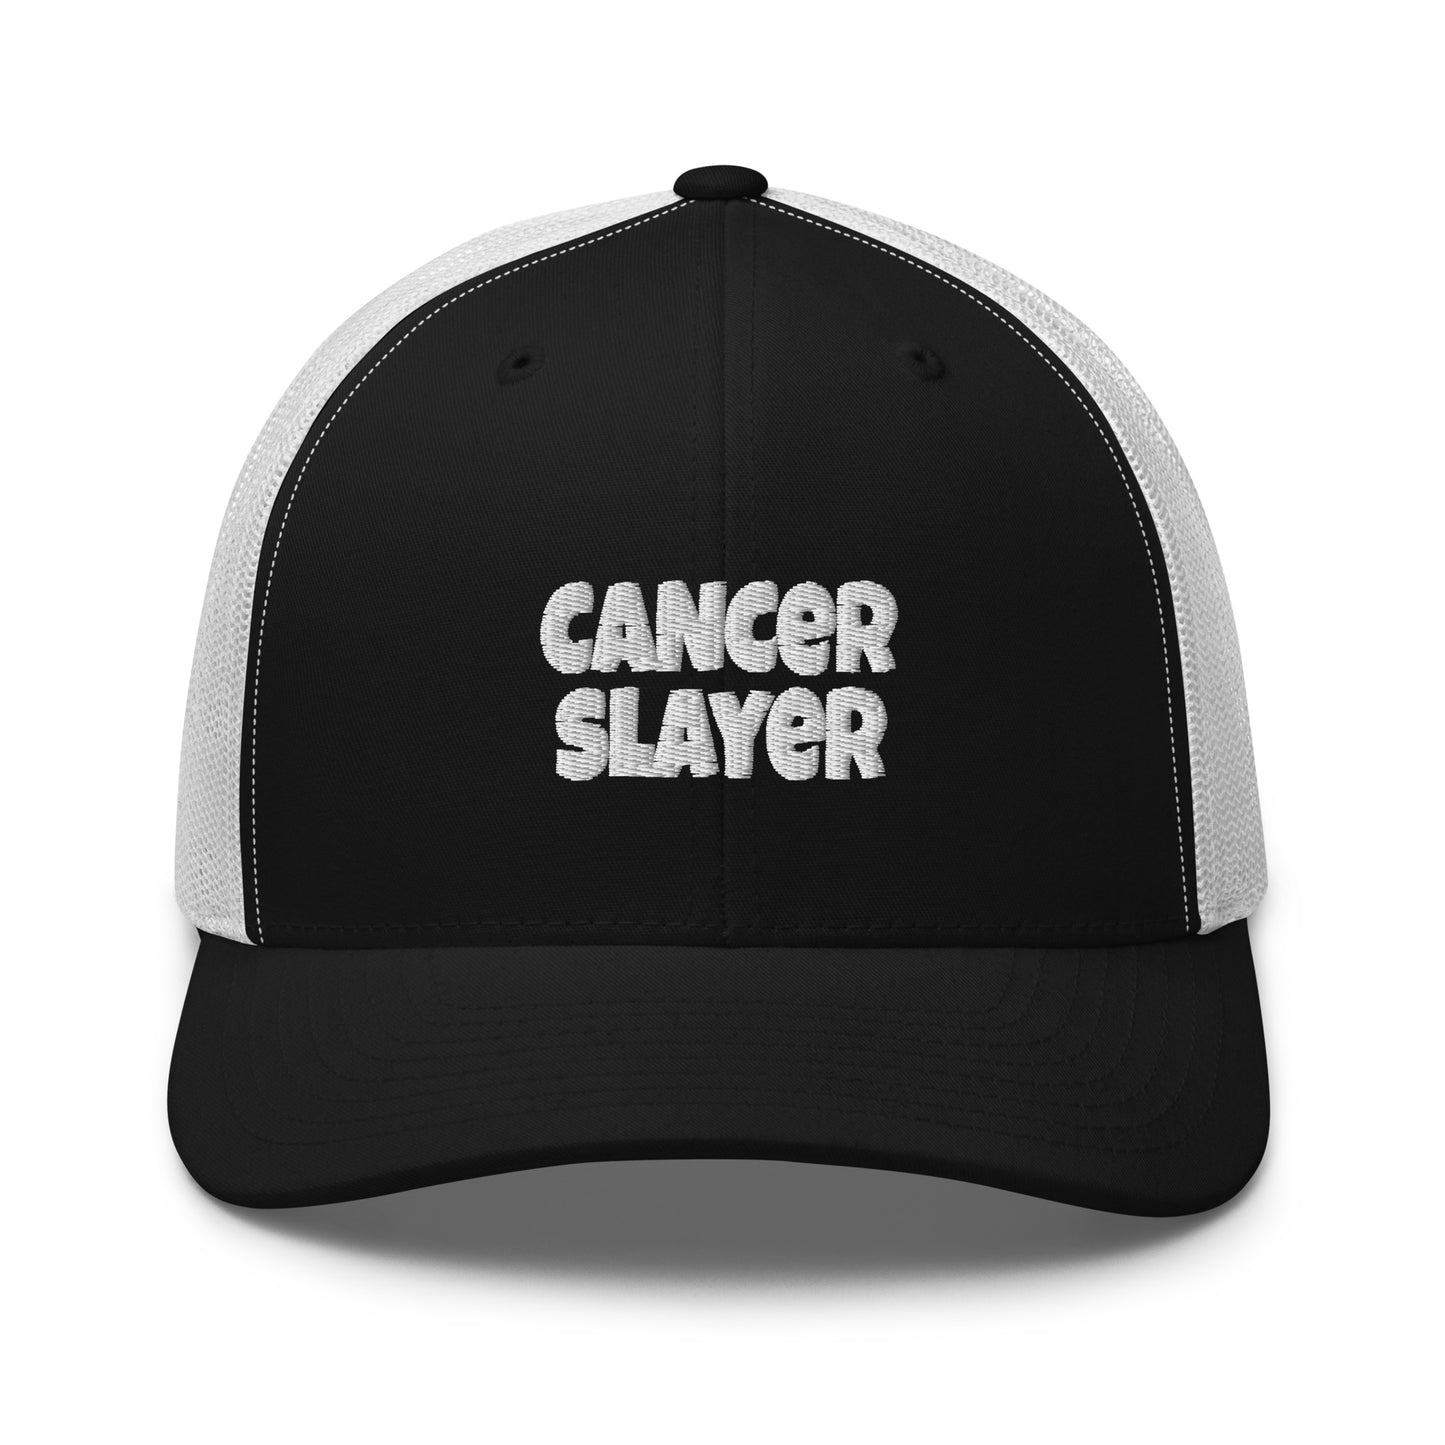 Cancer Slayer Trucker Cap